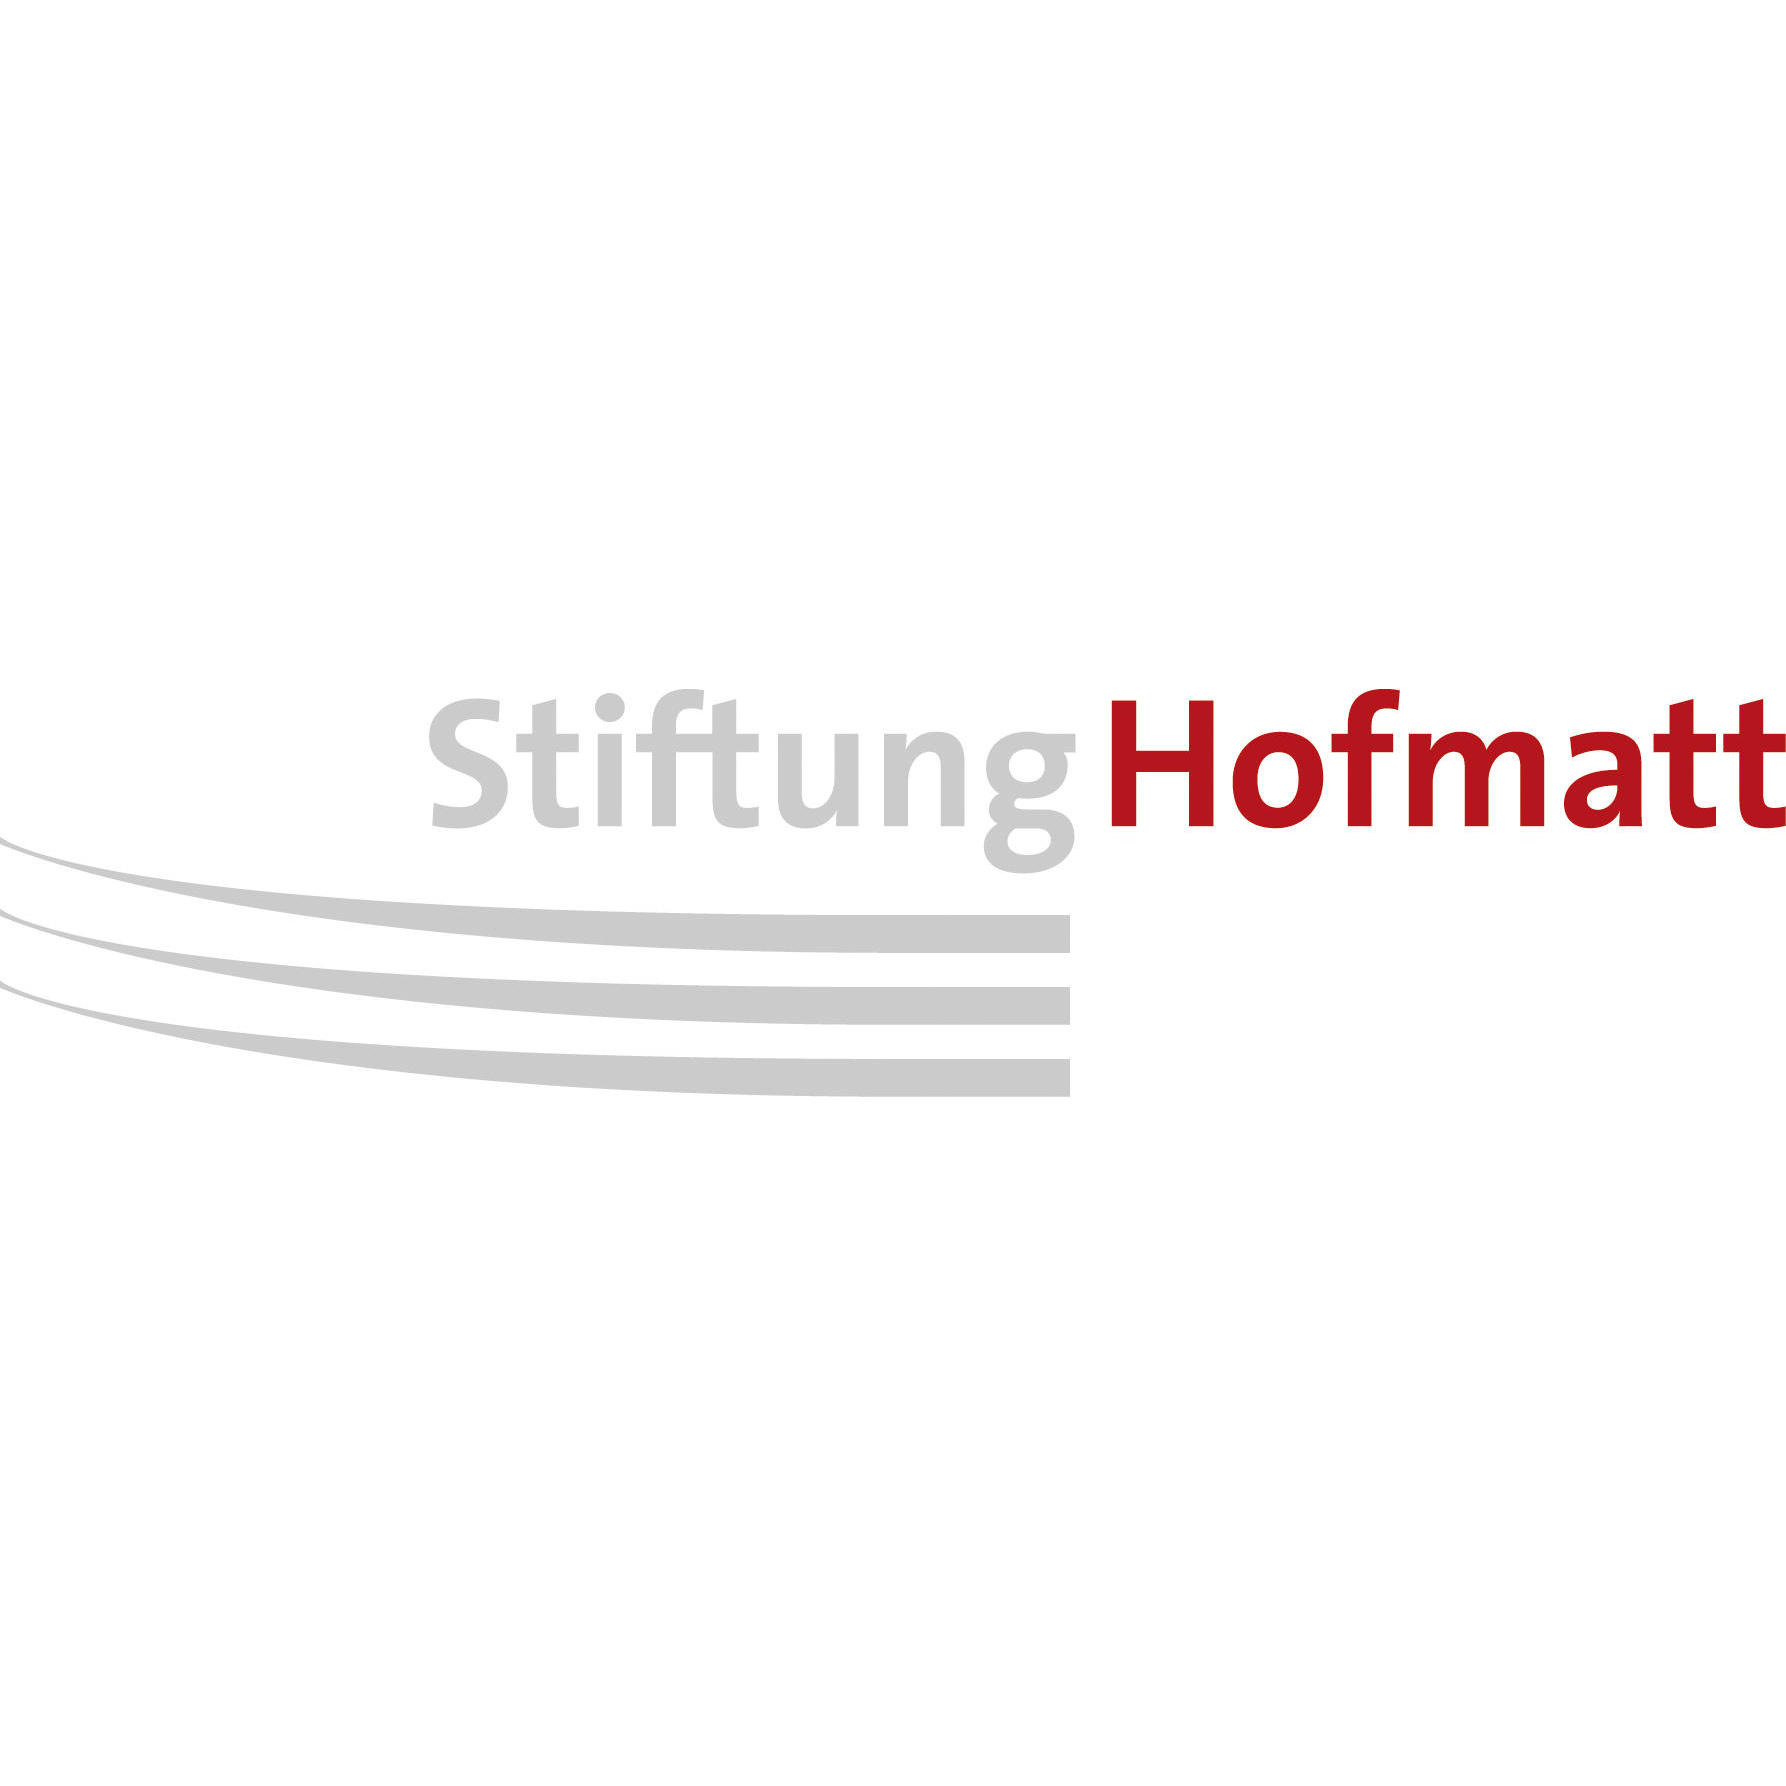 Stiftung Hofmatt Logo